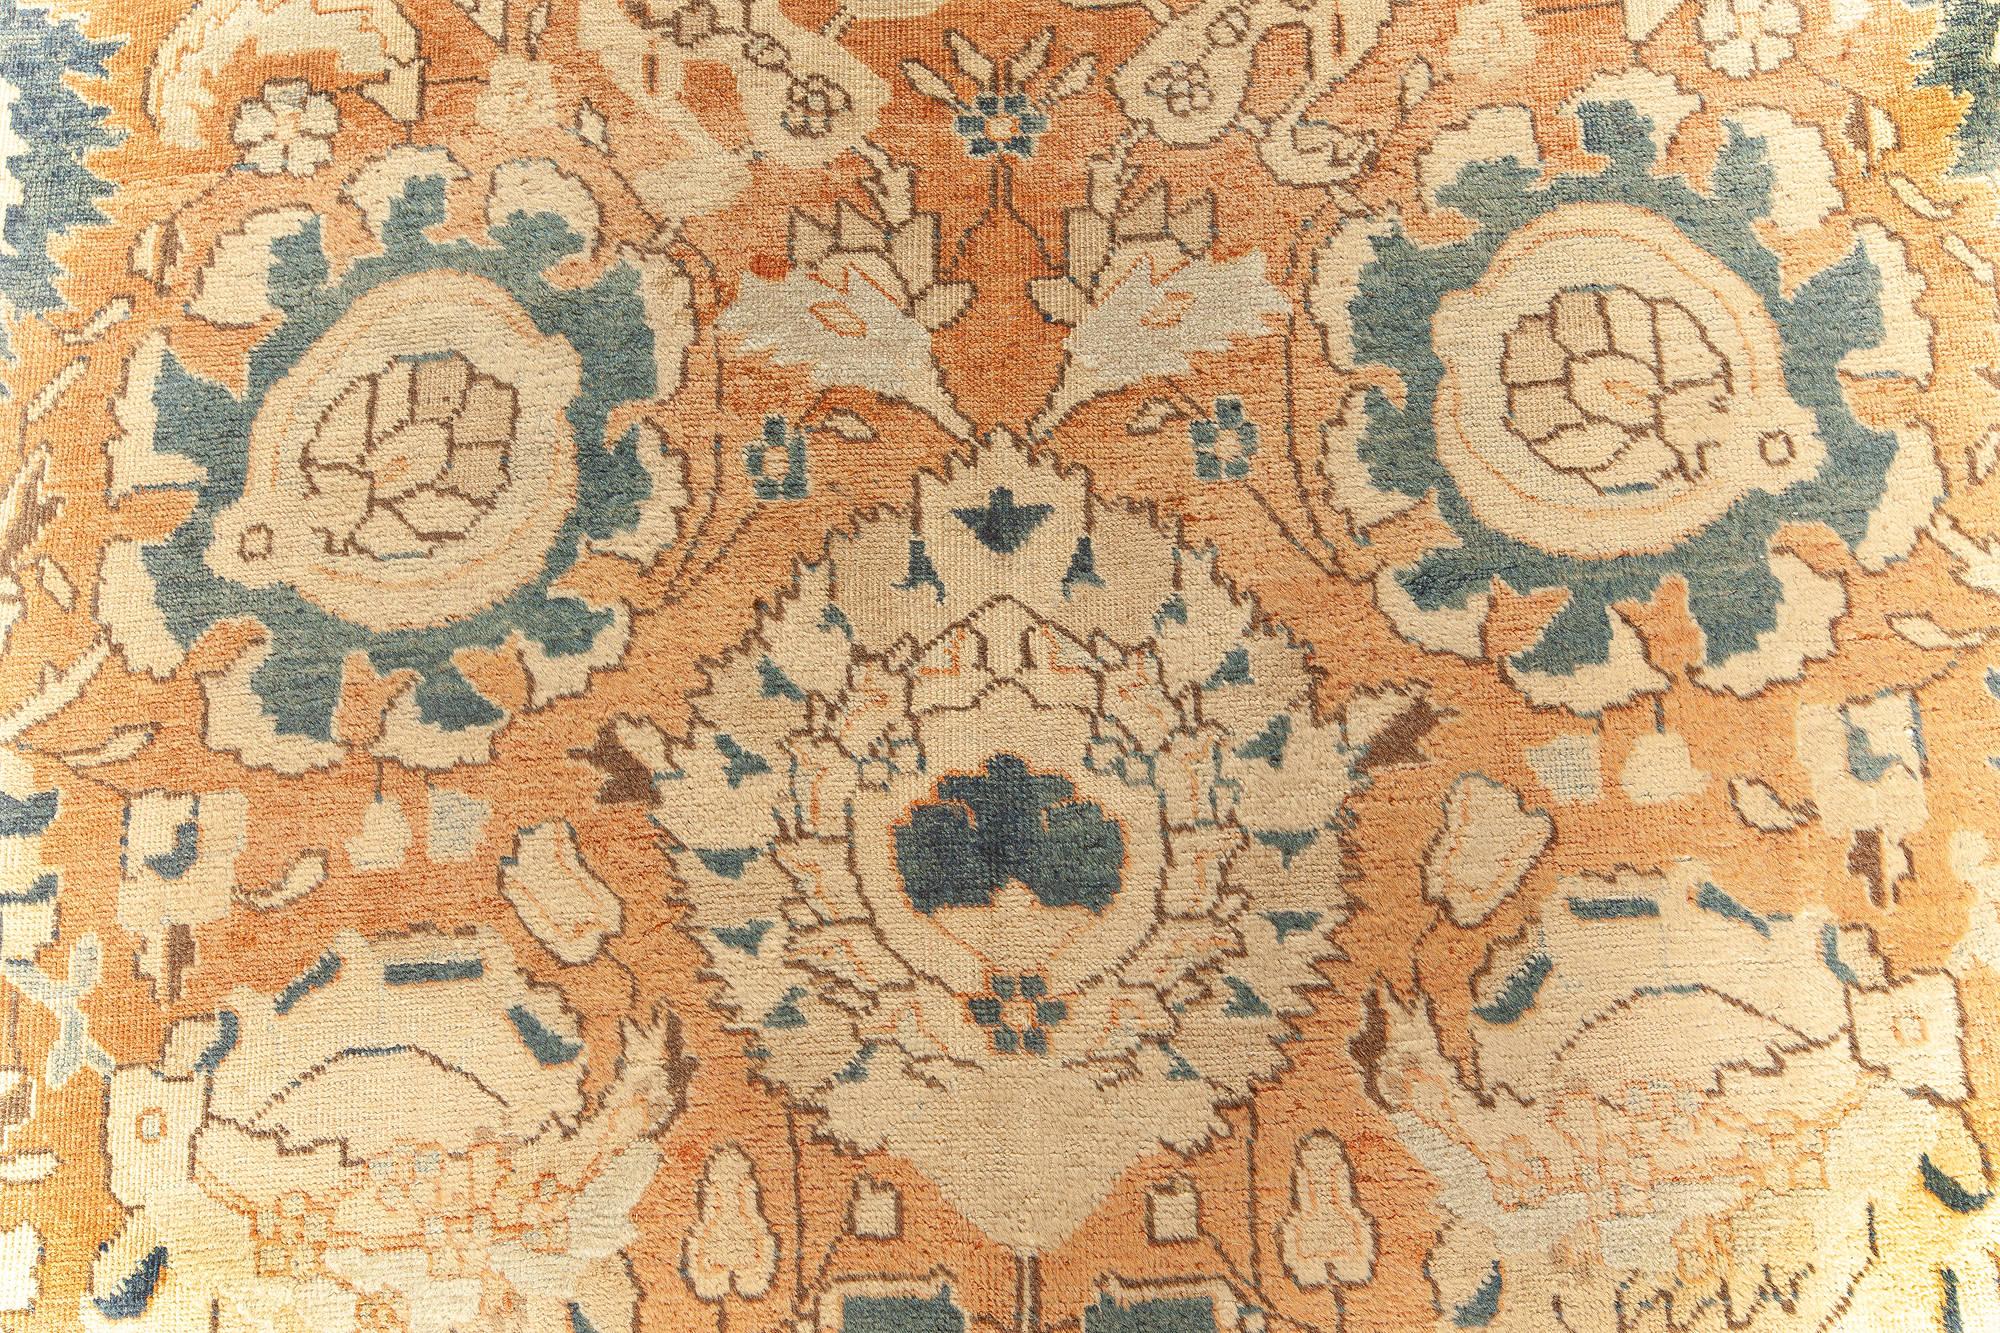 Antique Persian Tabriz Botanic Handmade Wool Rug
Size: 11'0